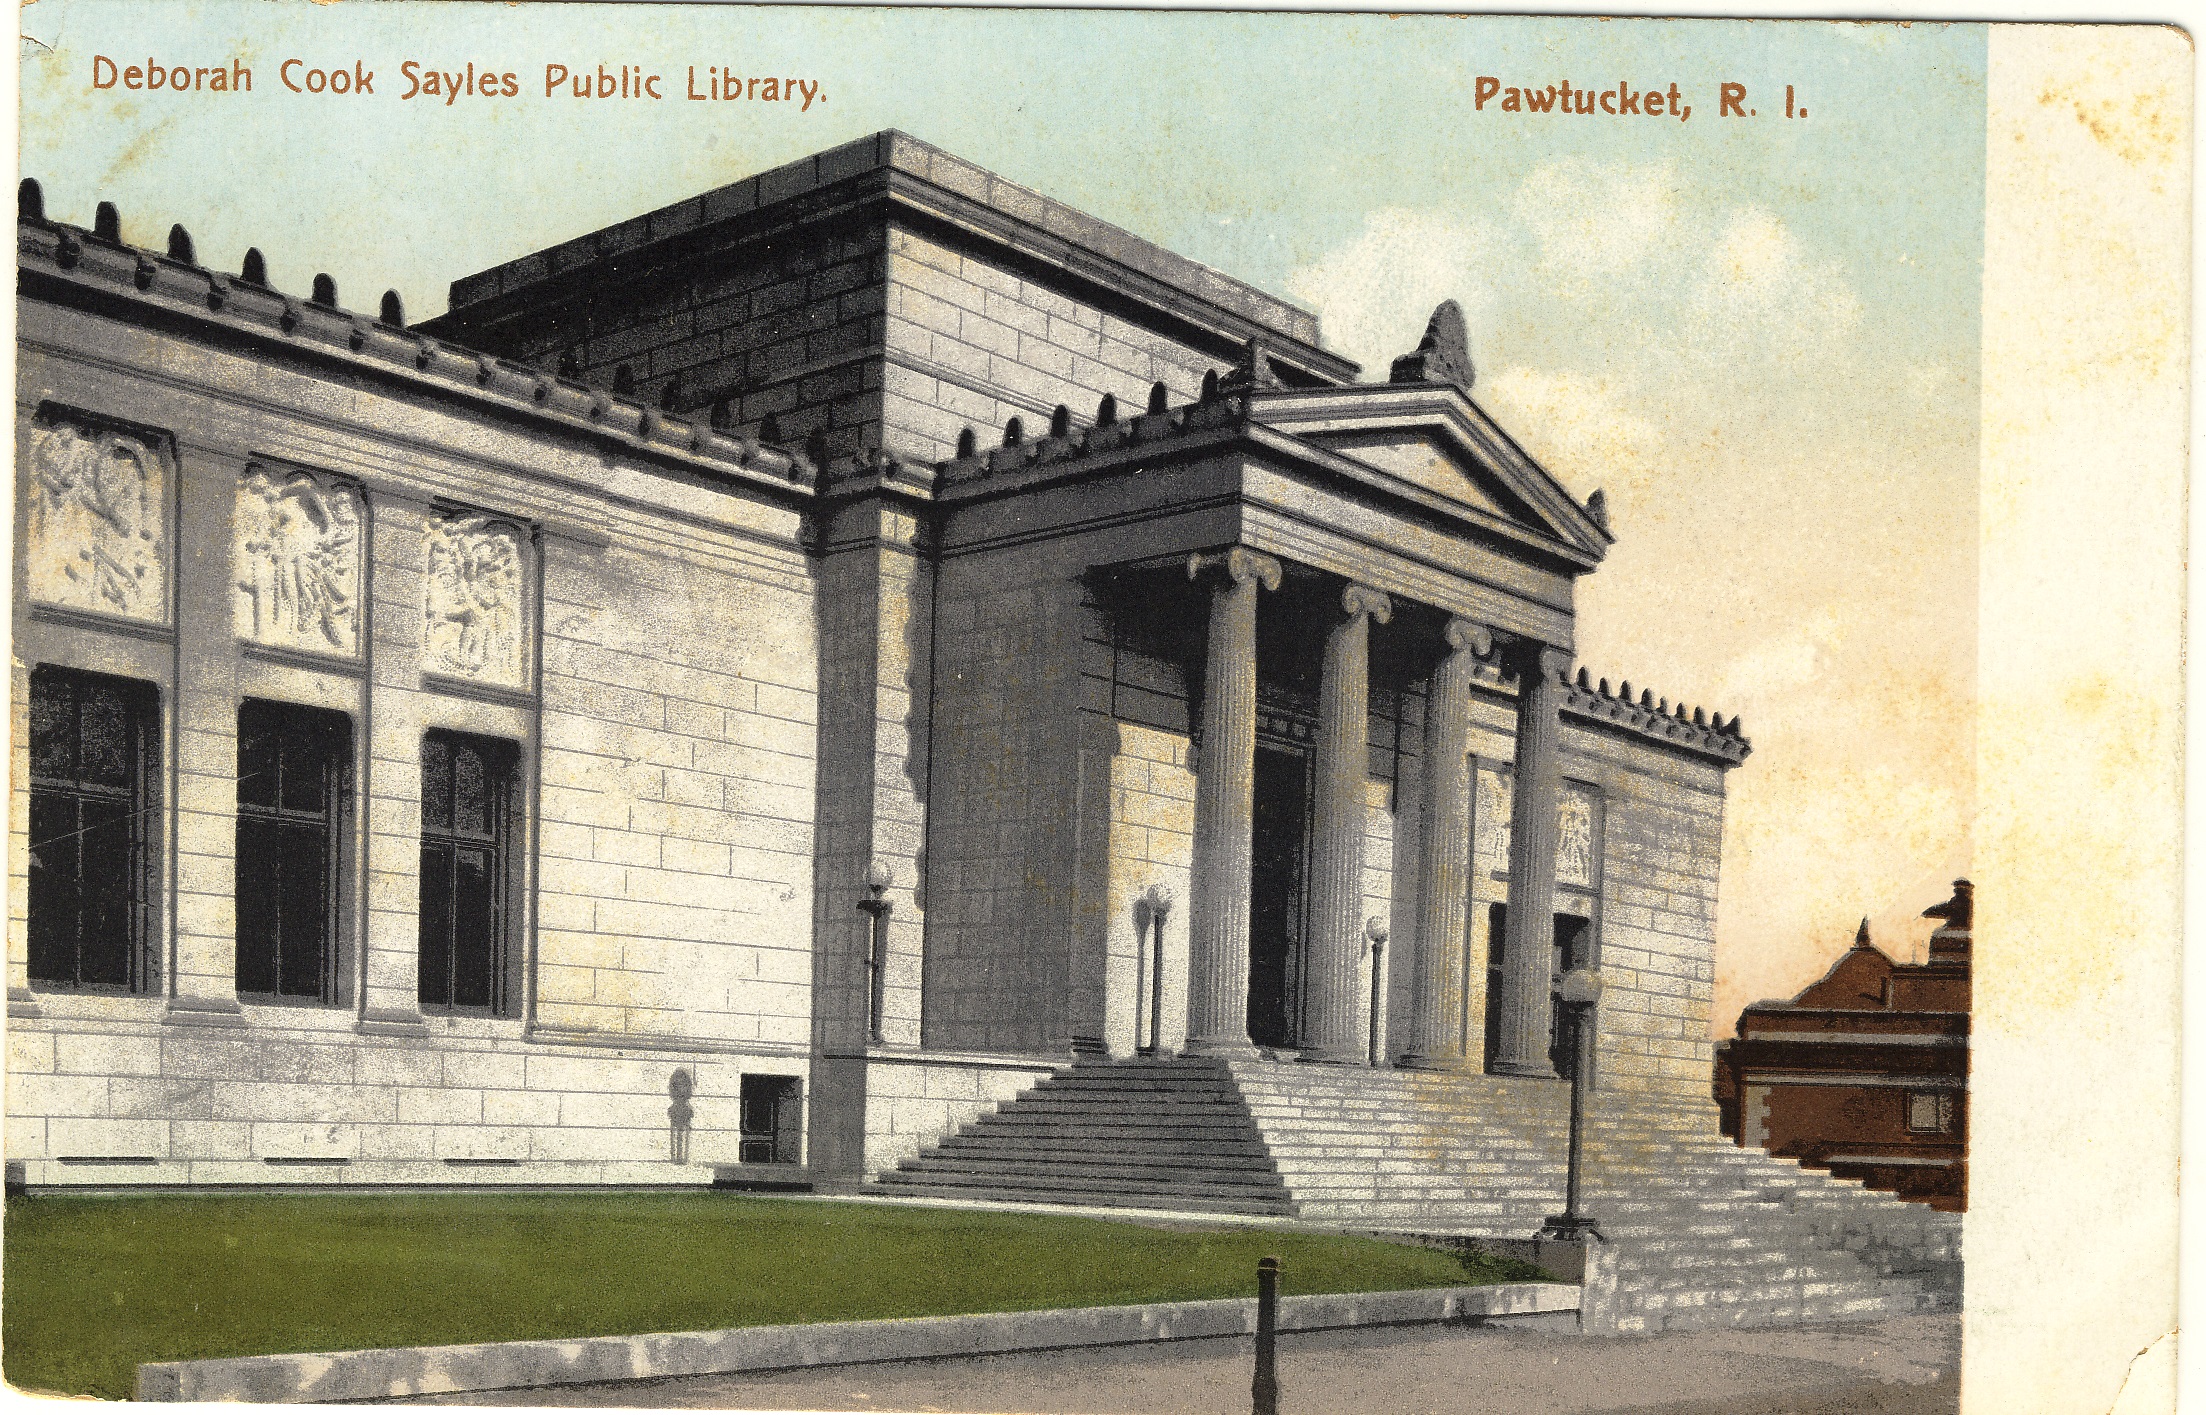 Deborah Cook Sayles Public Library, Pawtucket, Rhode Island, USA - postcard